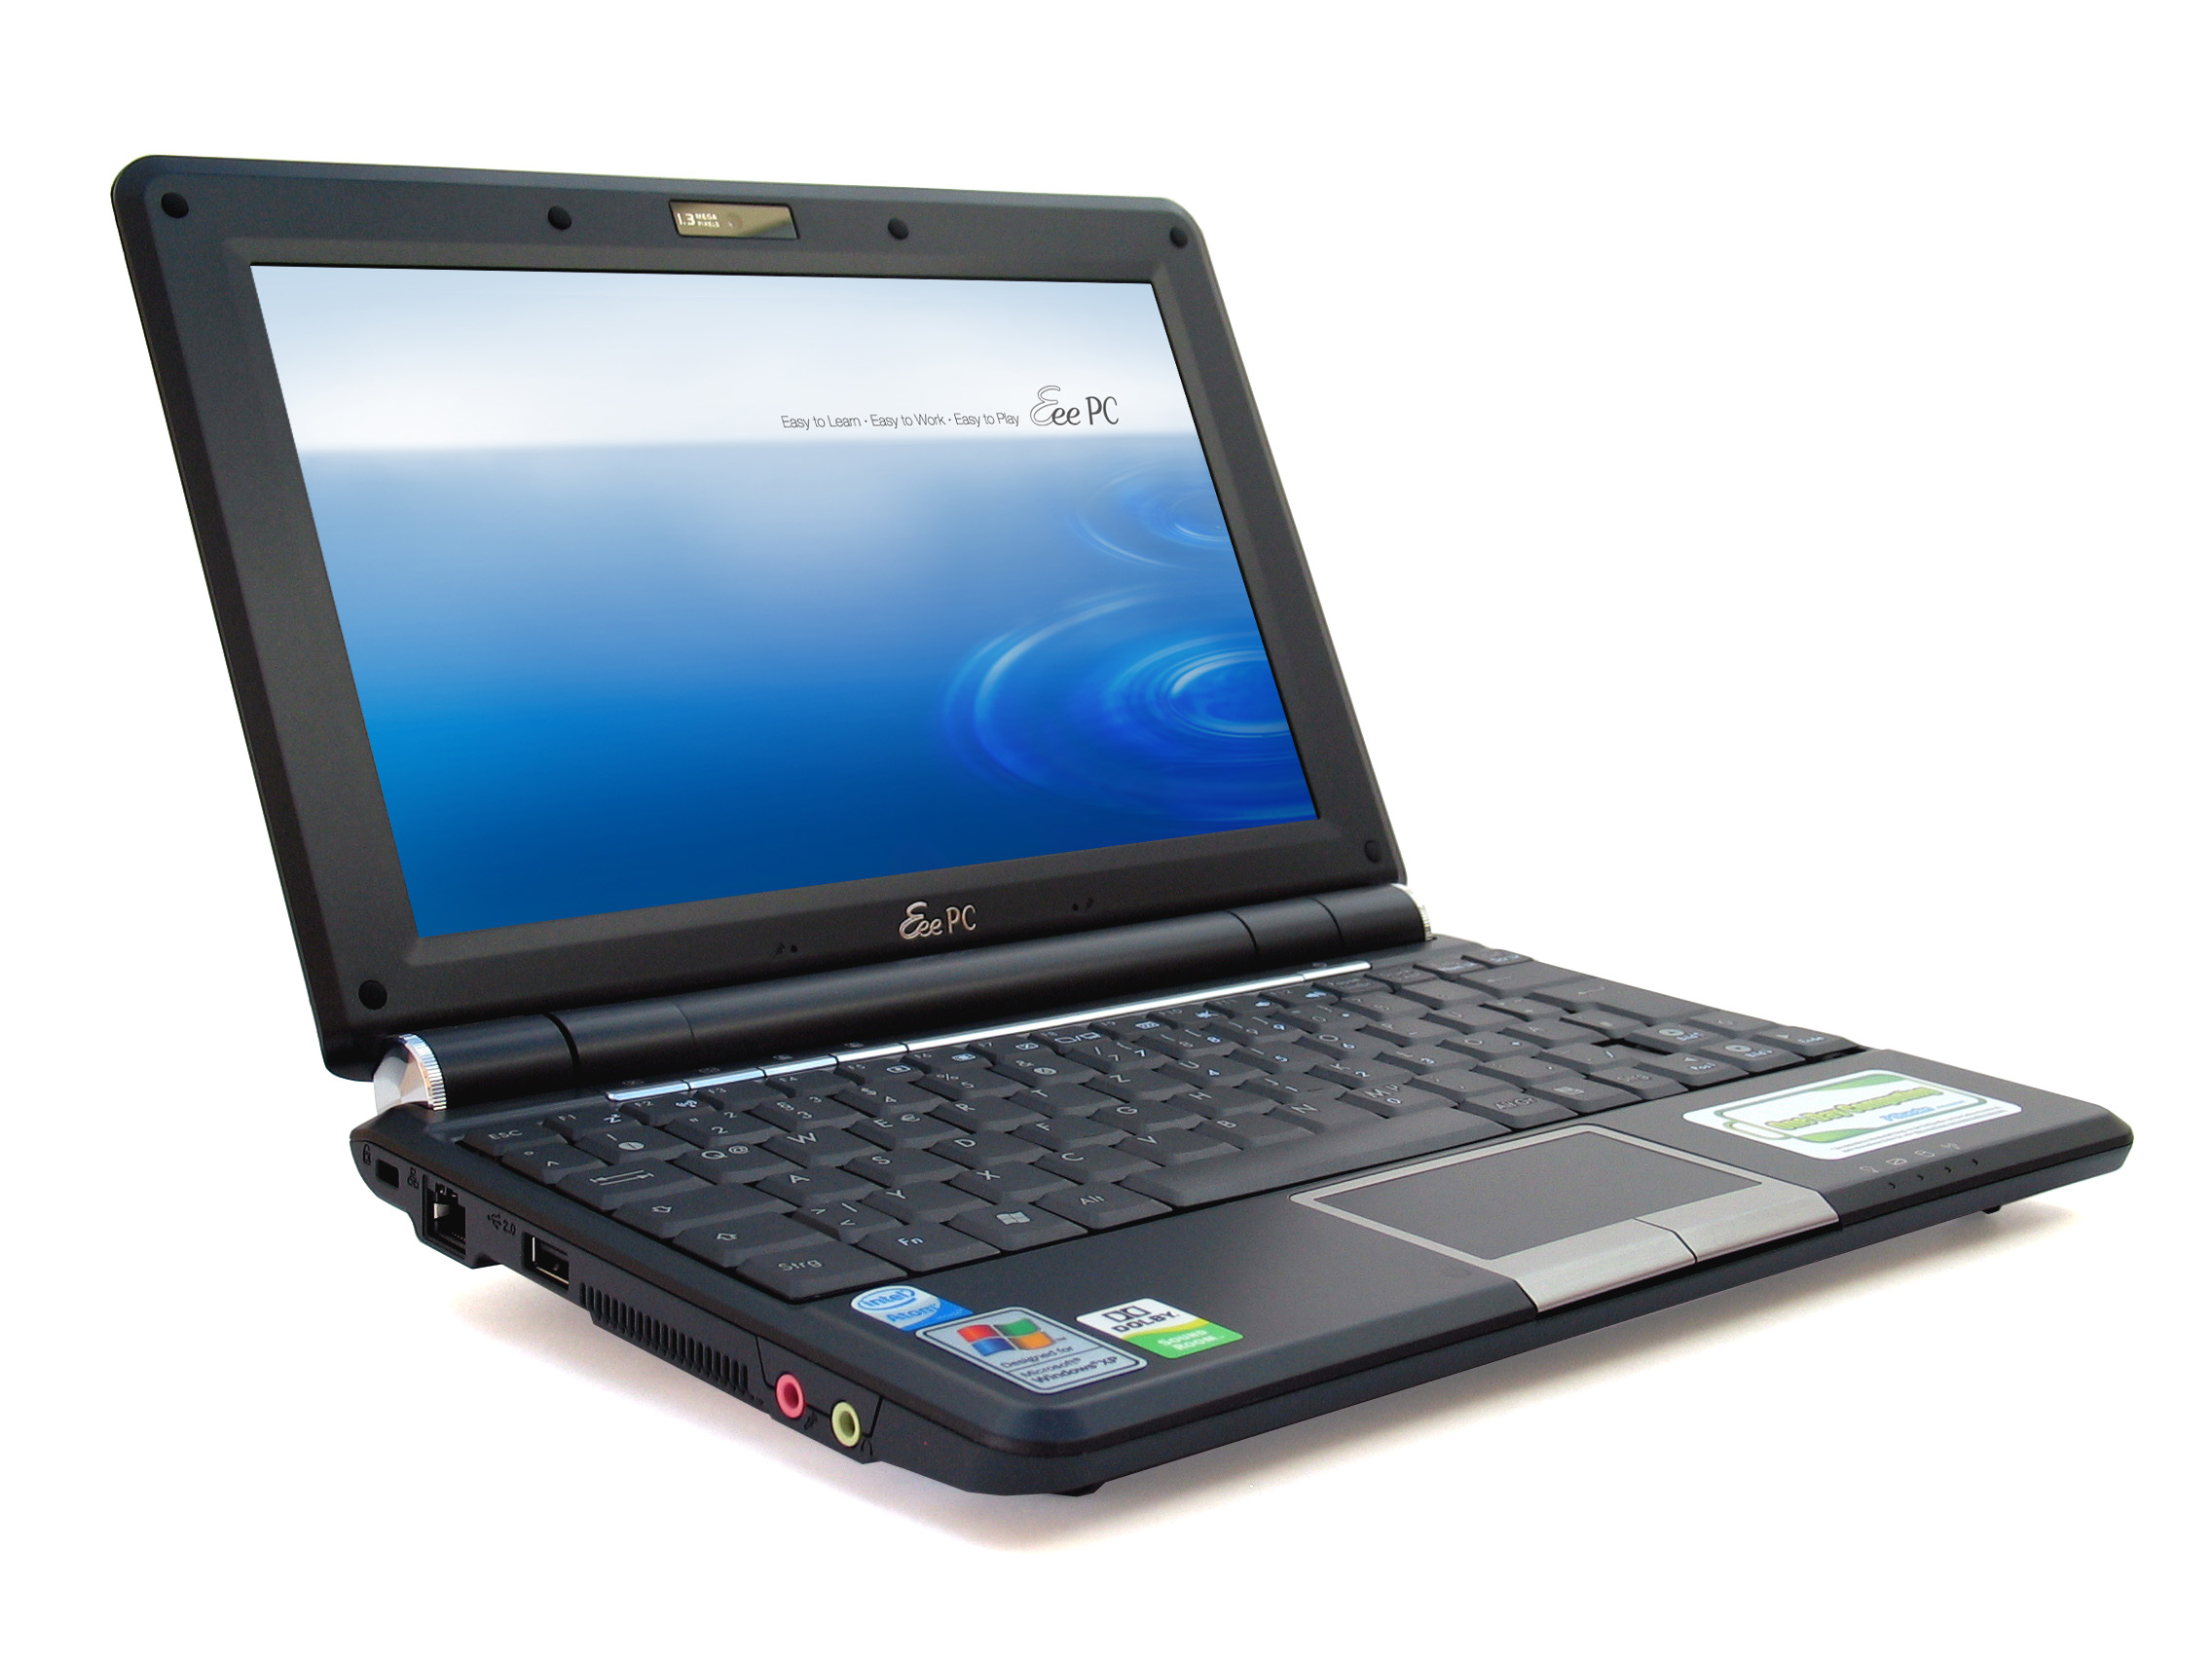 Van God wagon gips Asus Eee PC 1000H - Notebookcheck.net External Reviews